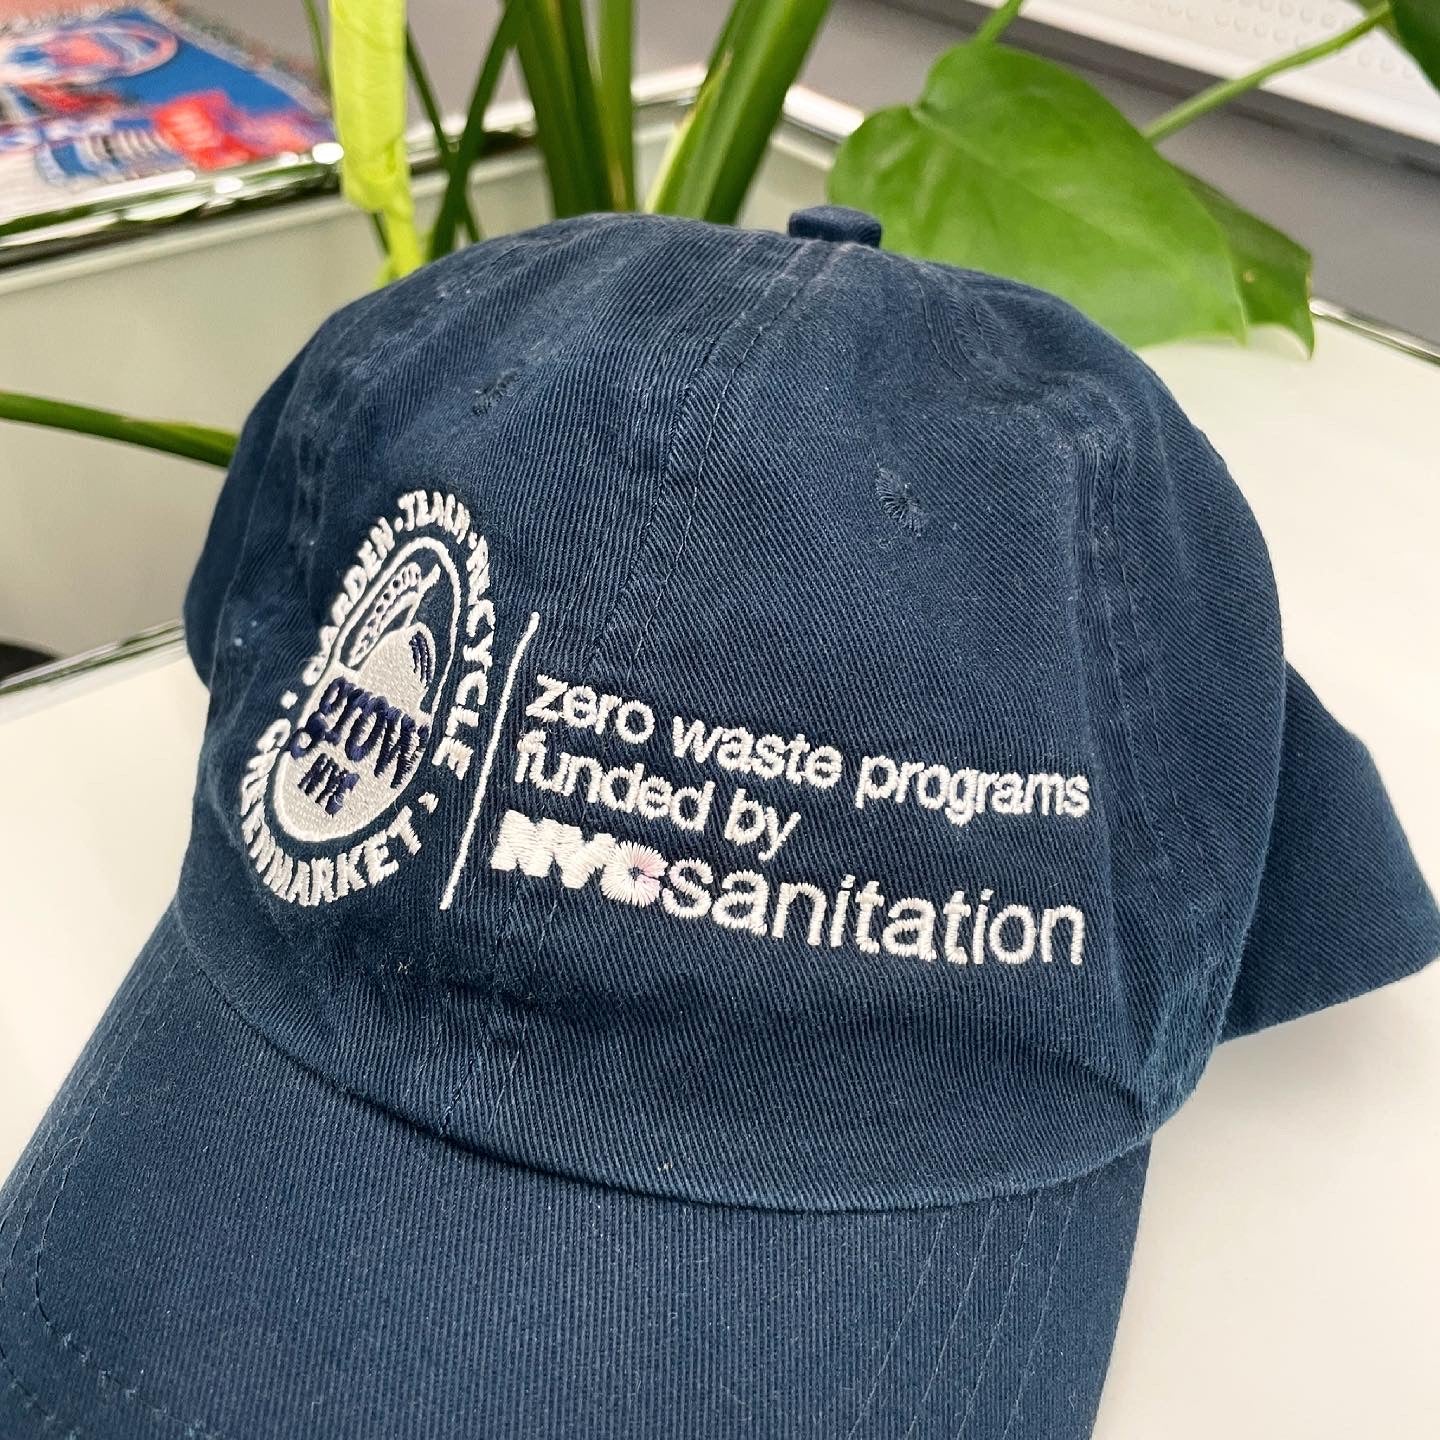 Zero Waste Programs Funded by NYC Sanitation, grow NYC Cap